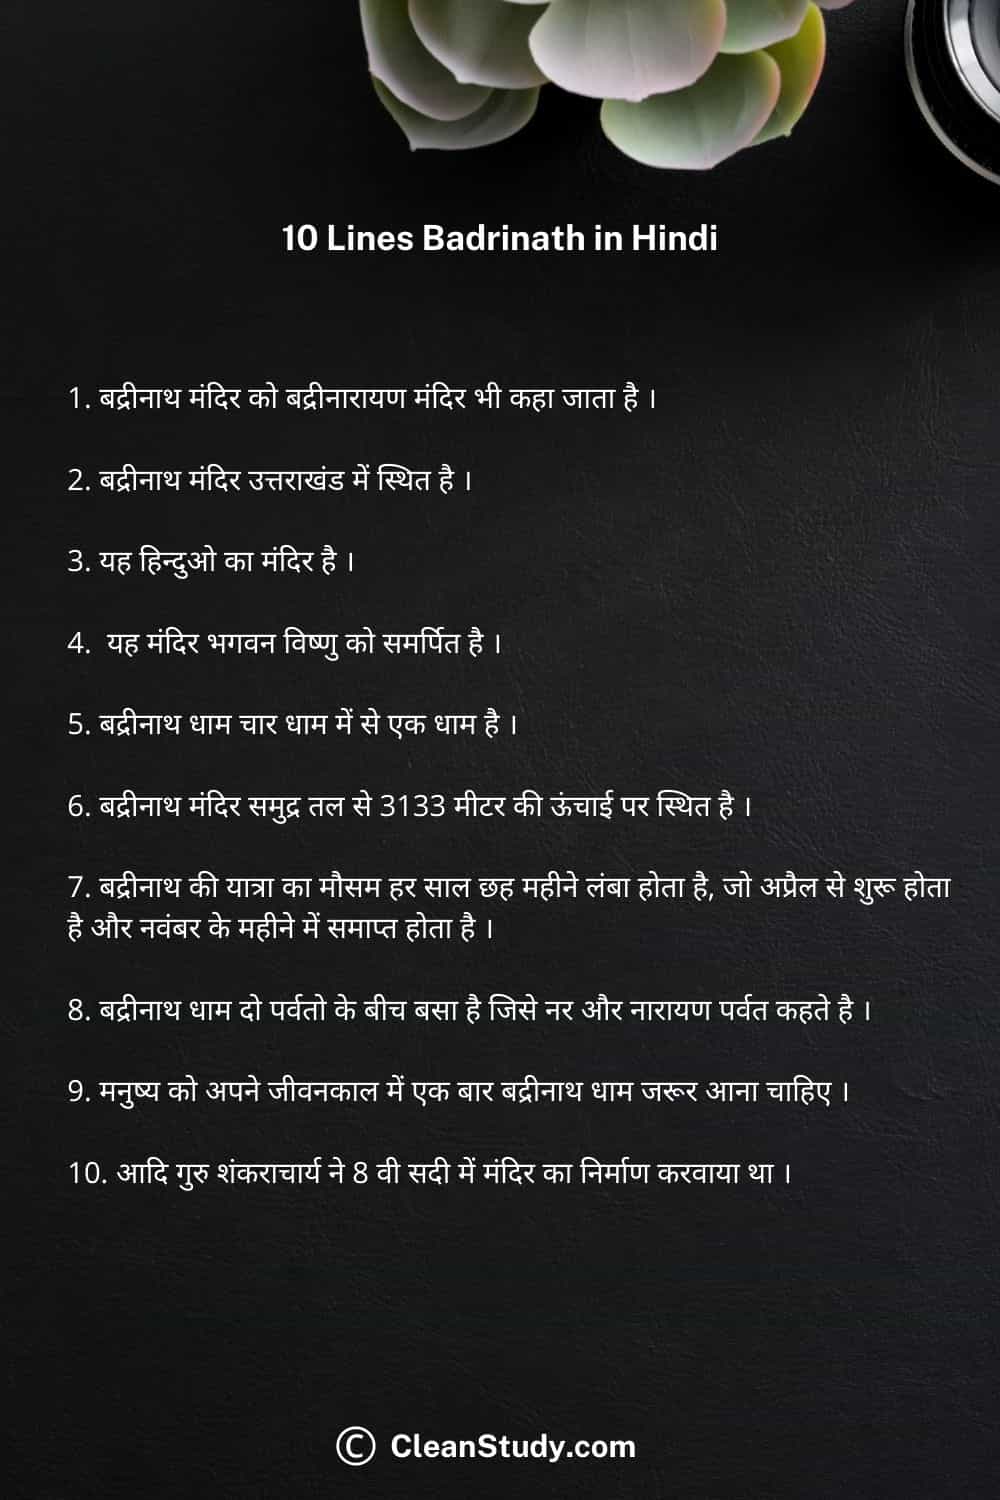 10 Lines on Badrinath in Hindi